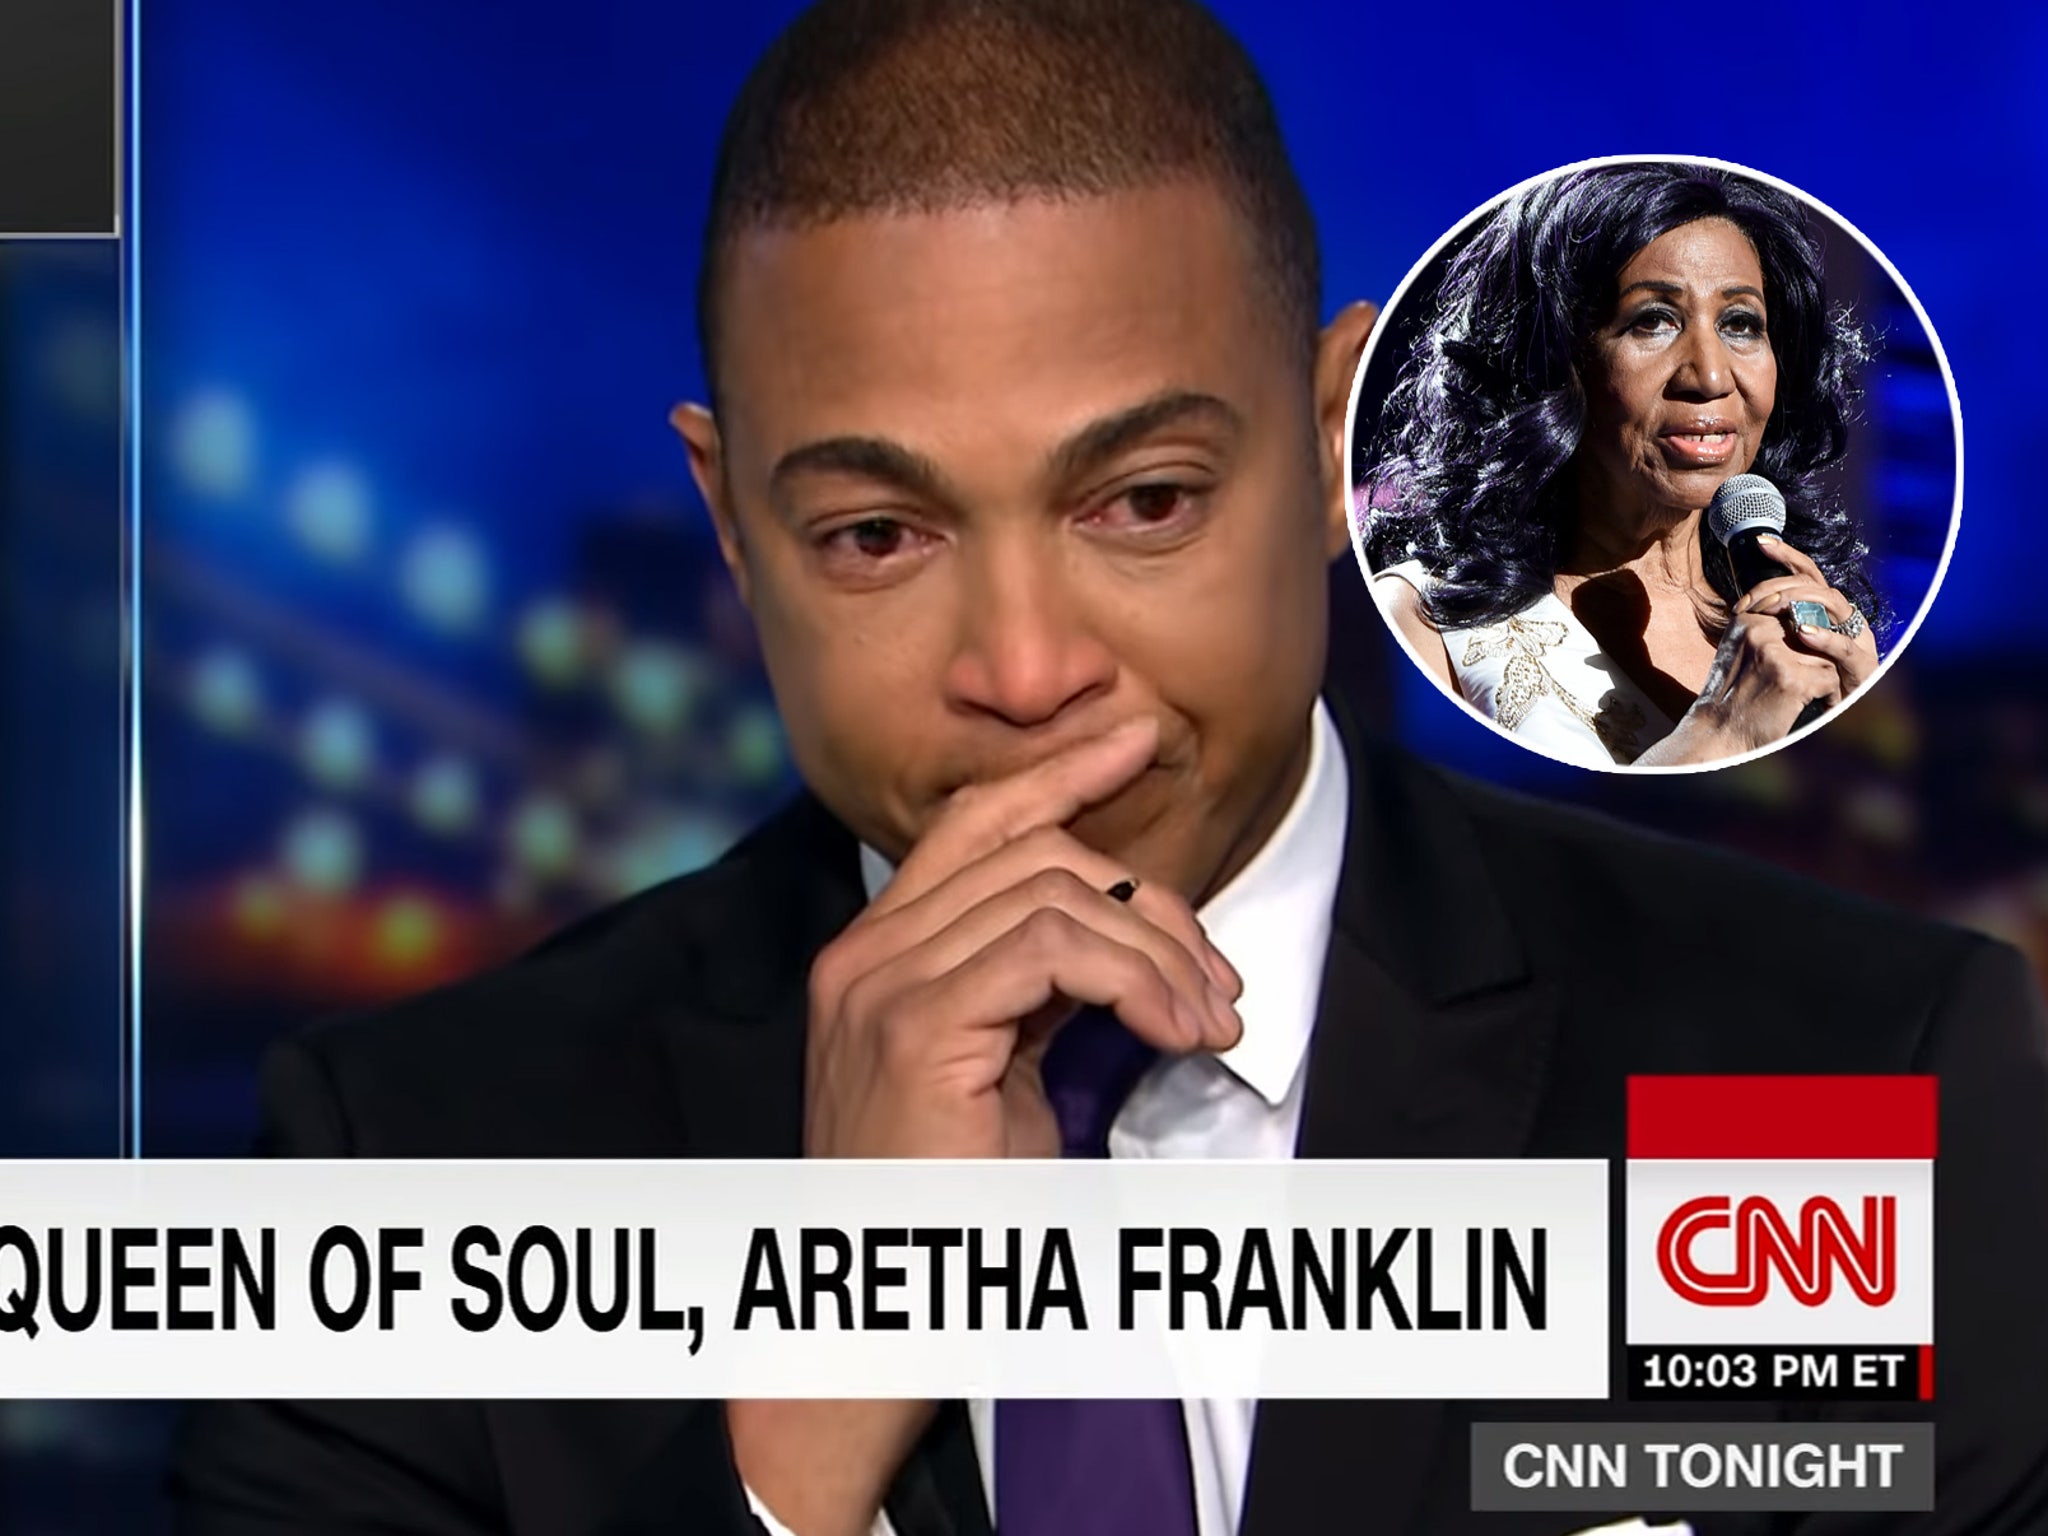 Don Lemon Breaks Down During Emotional Tribute to Aretha Franklin on CNN